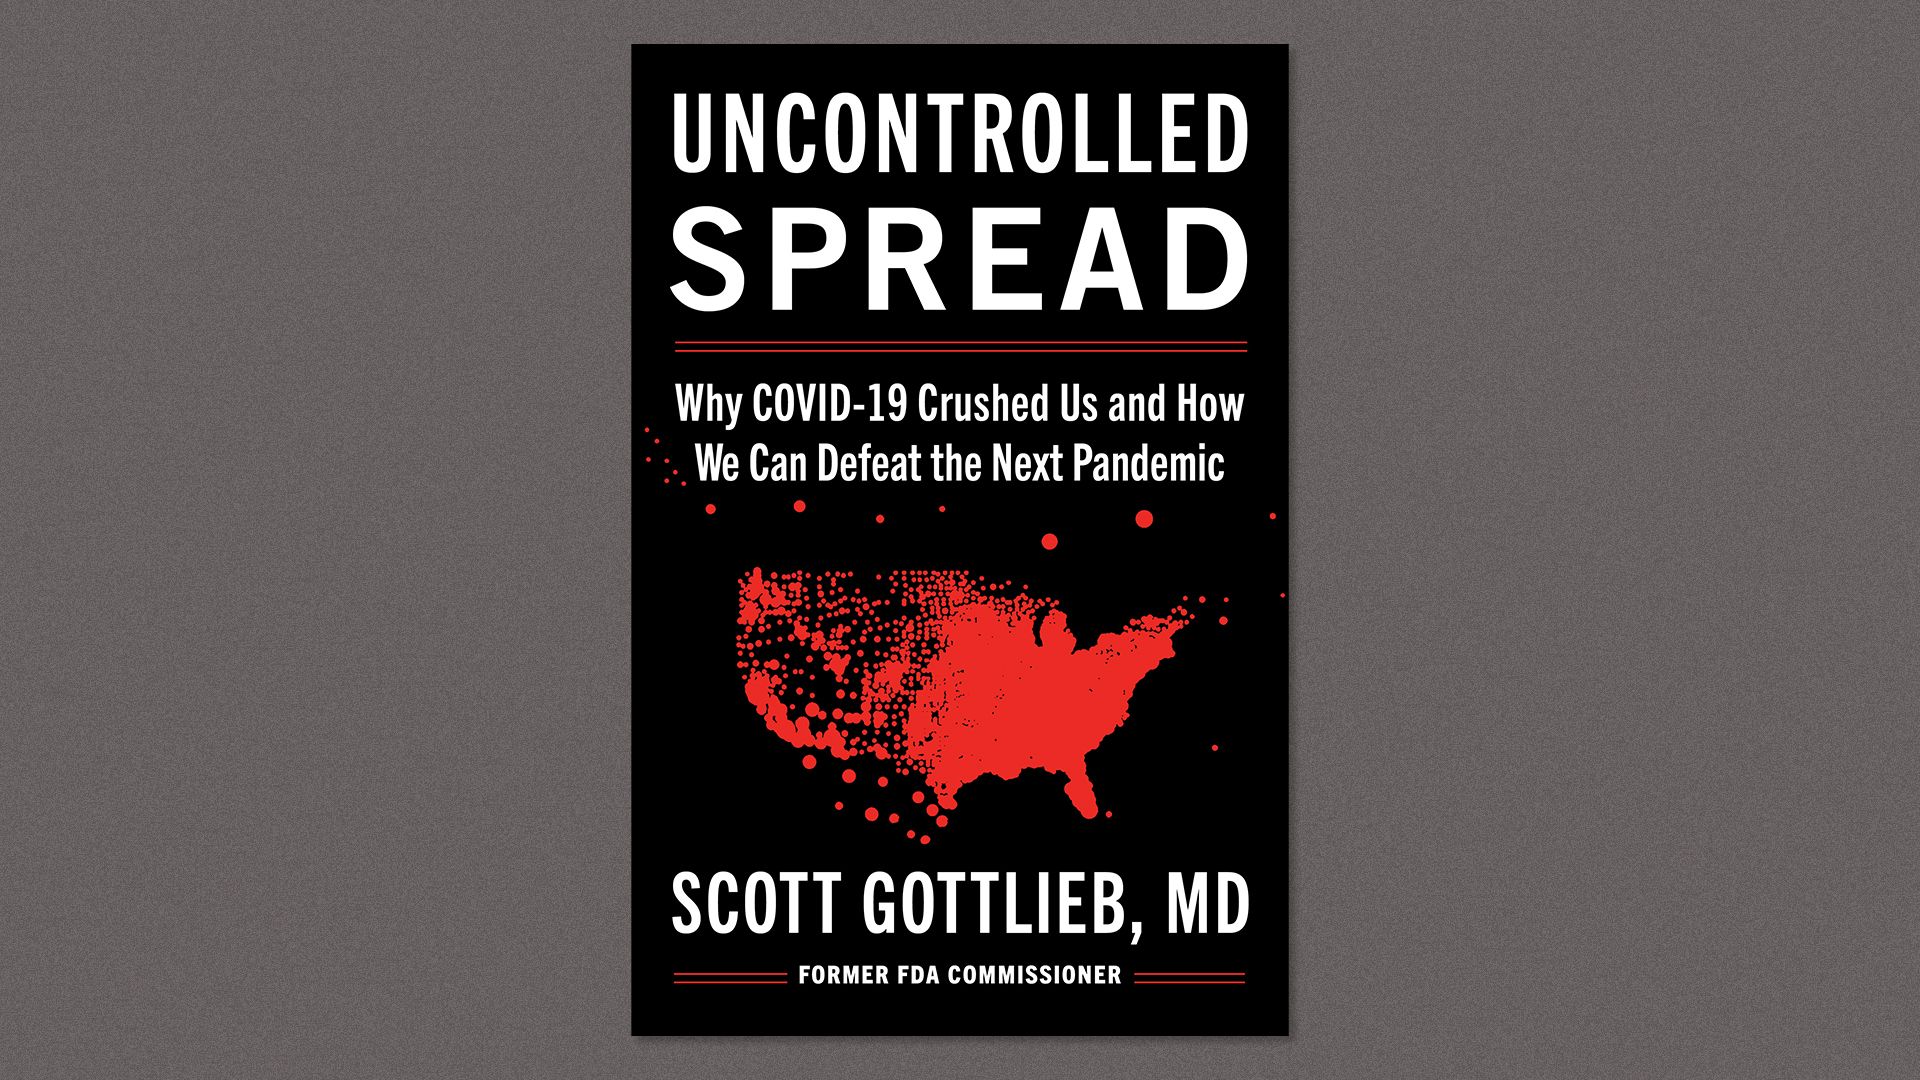 Scott Gottlieb's new book cover 'Uncontrolled Spread.'